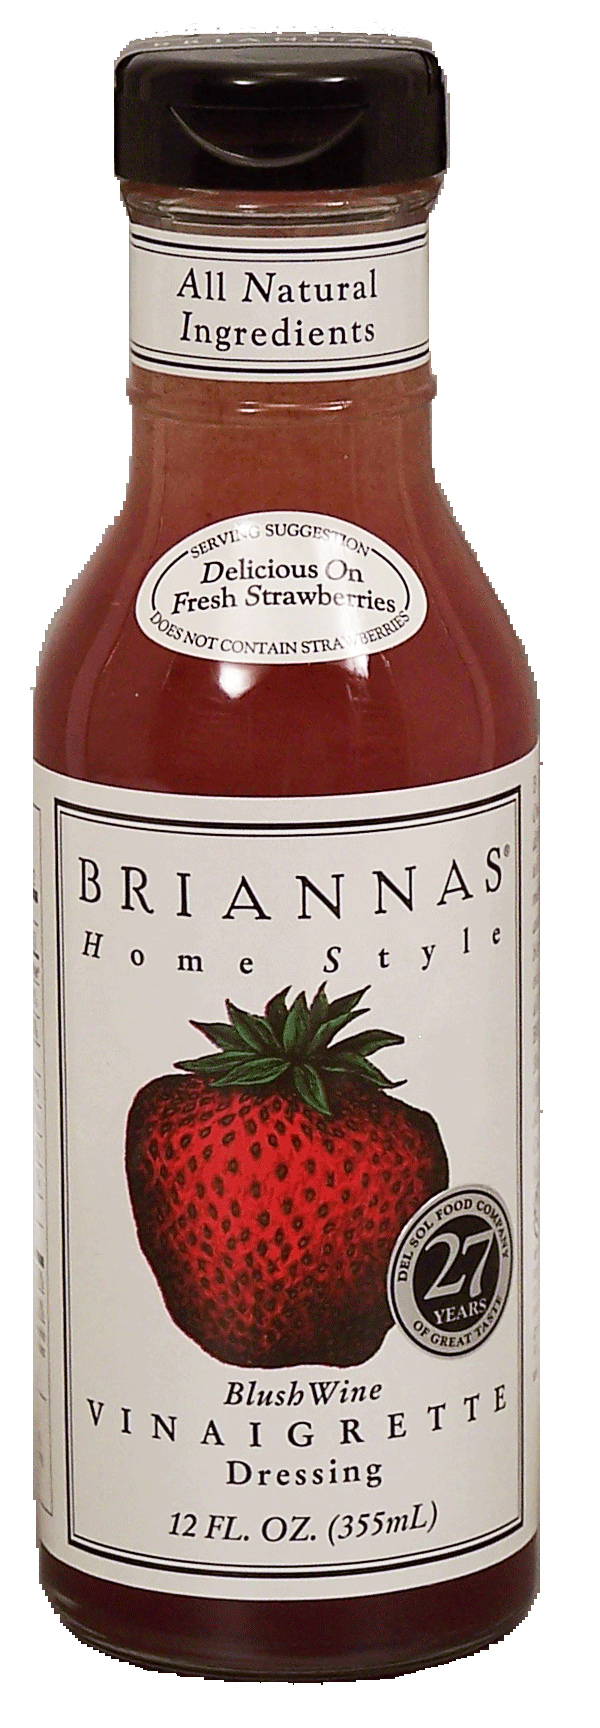 Briannas Home Style blush wine vinaigrette dressing Full-Size Picture